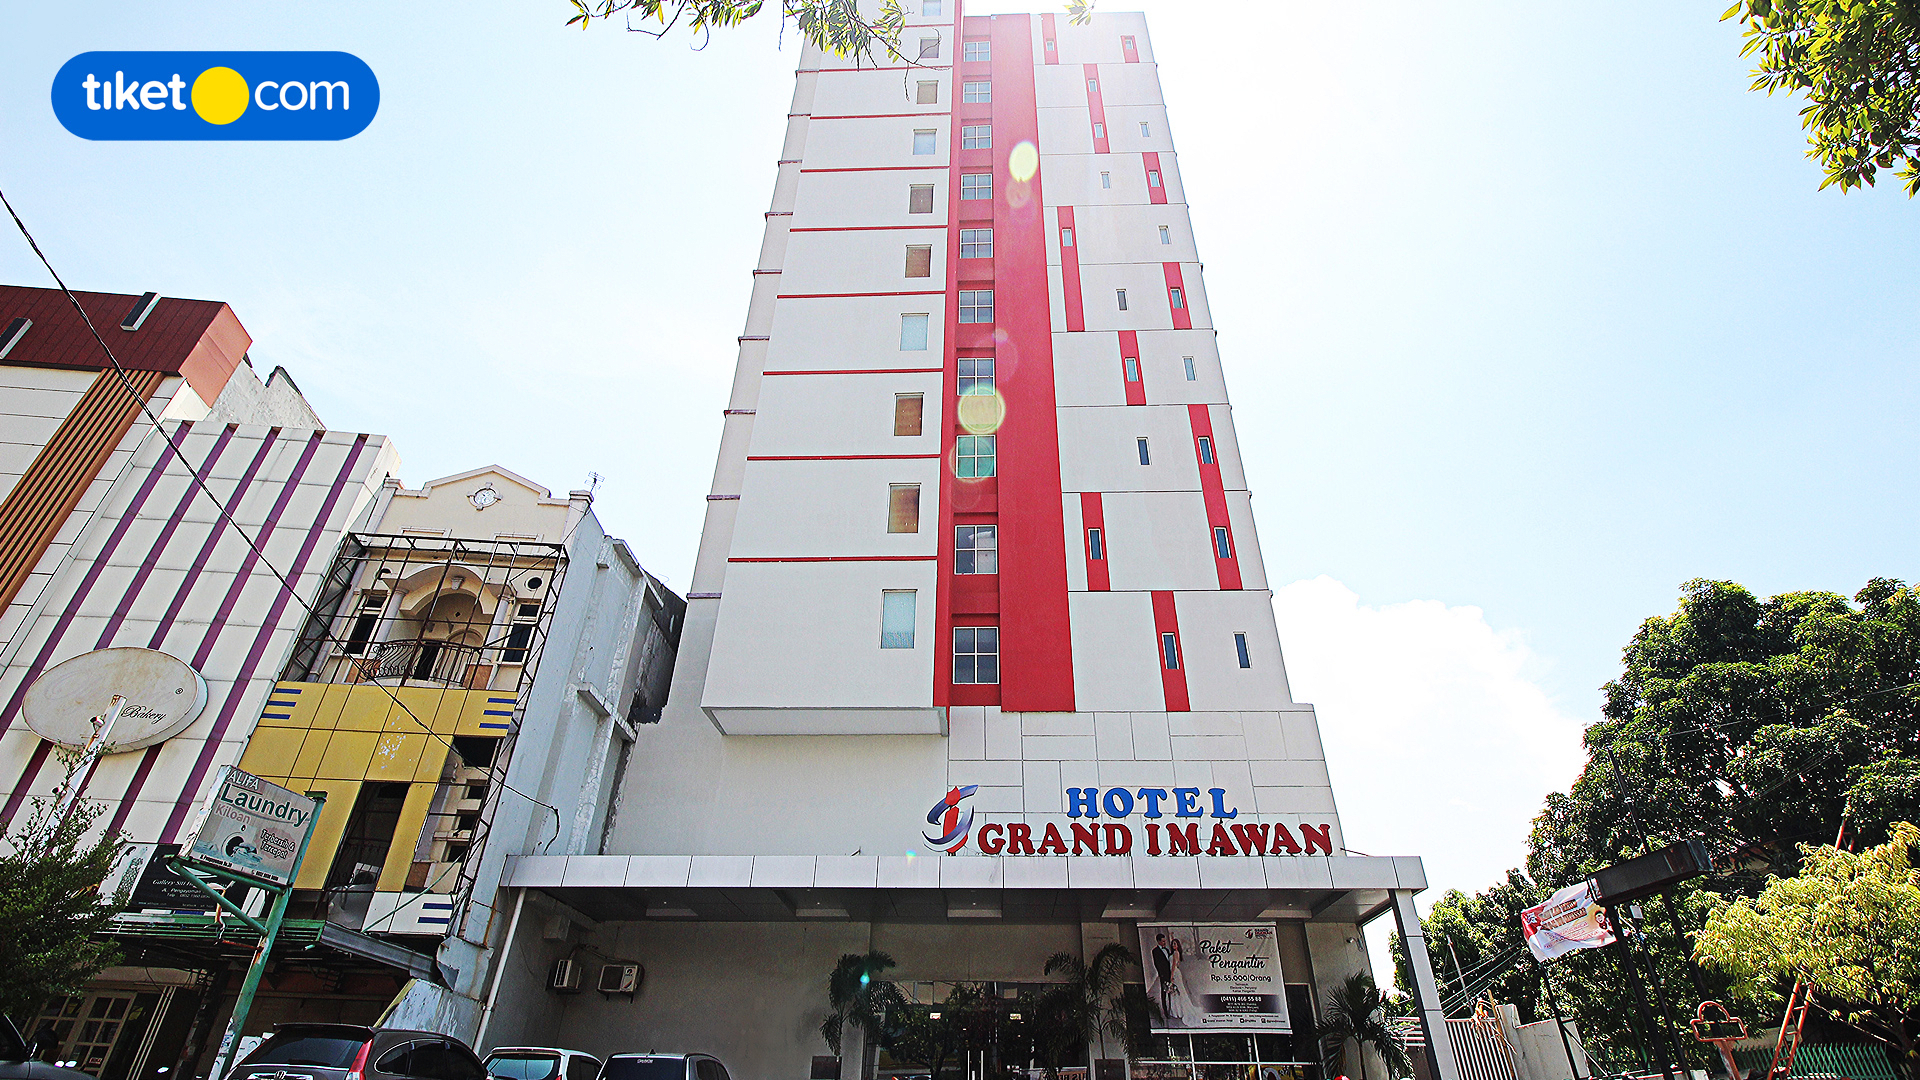 Grand Imawan Hotel Panakkukang, Makassar